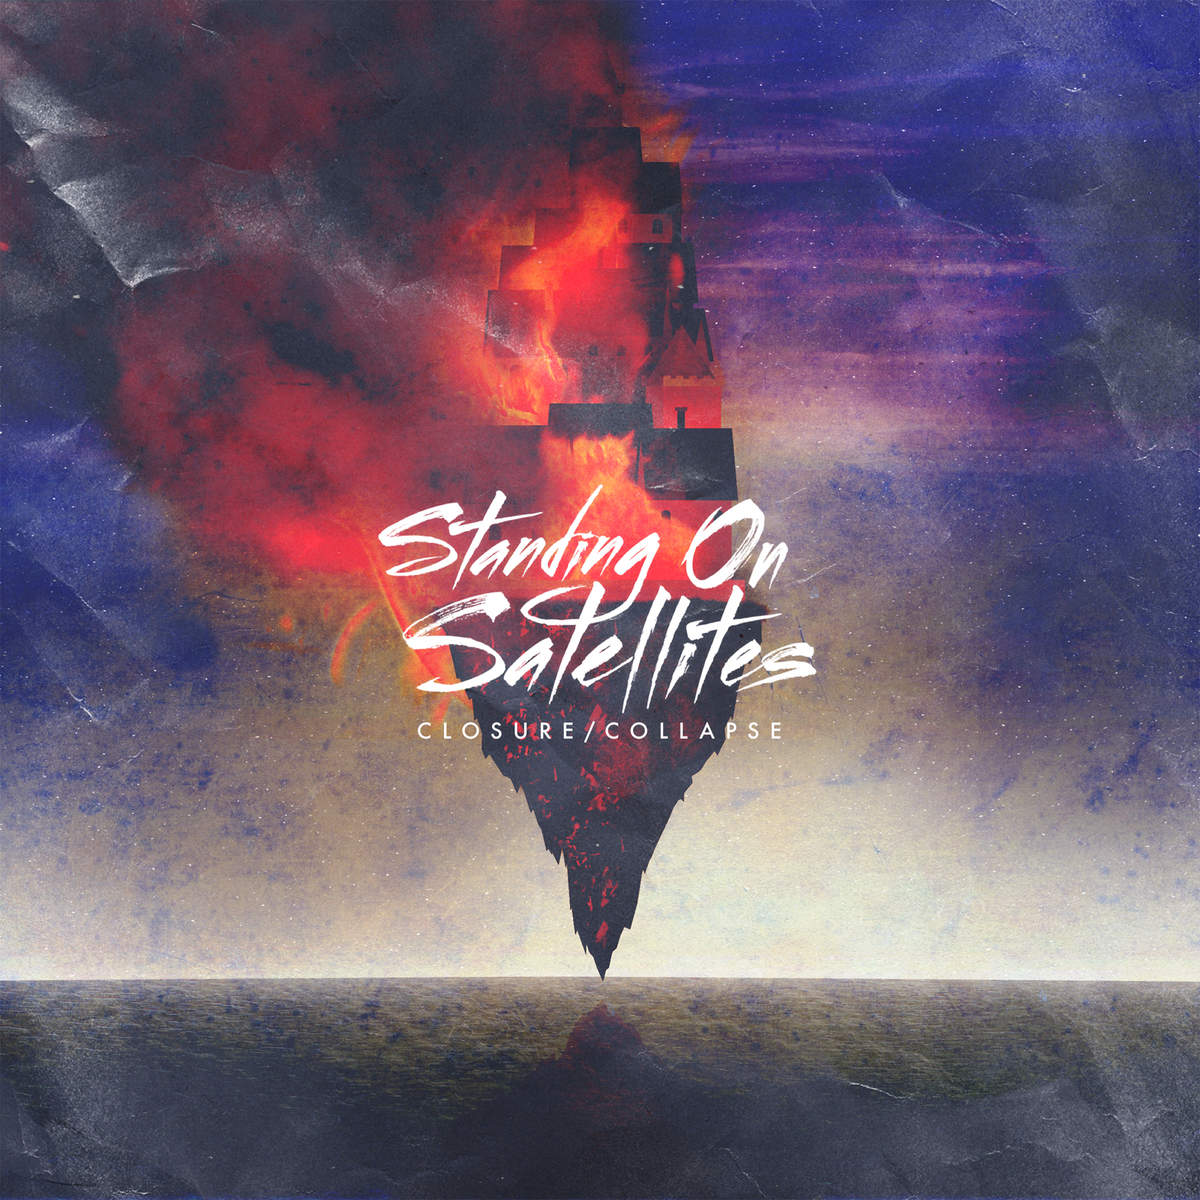 Standing on Satellites - Closure/Collapse [EP] (2014)